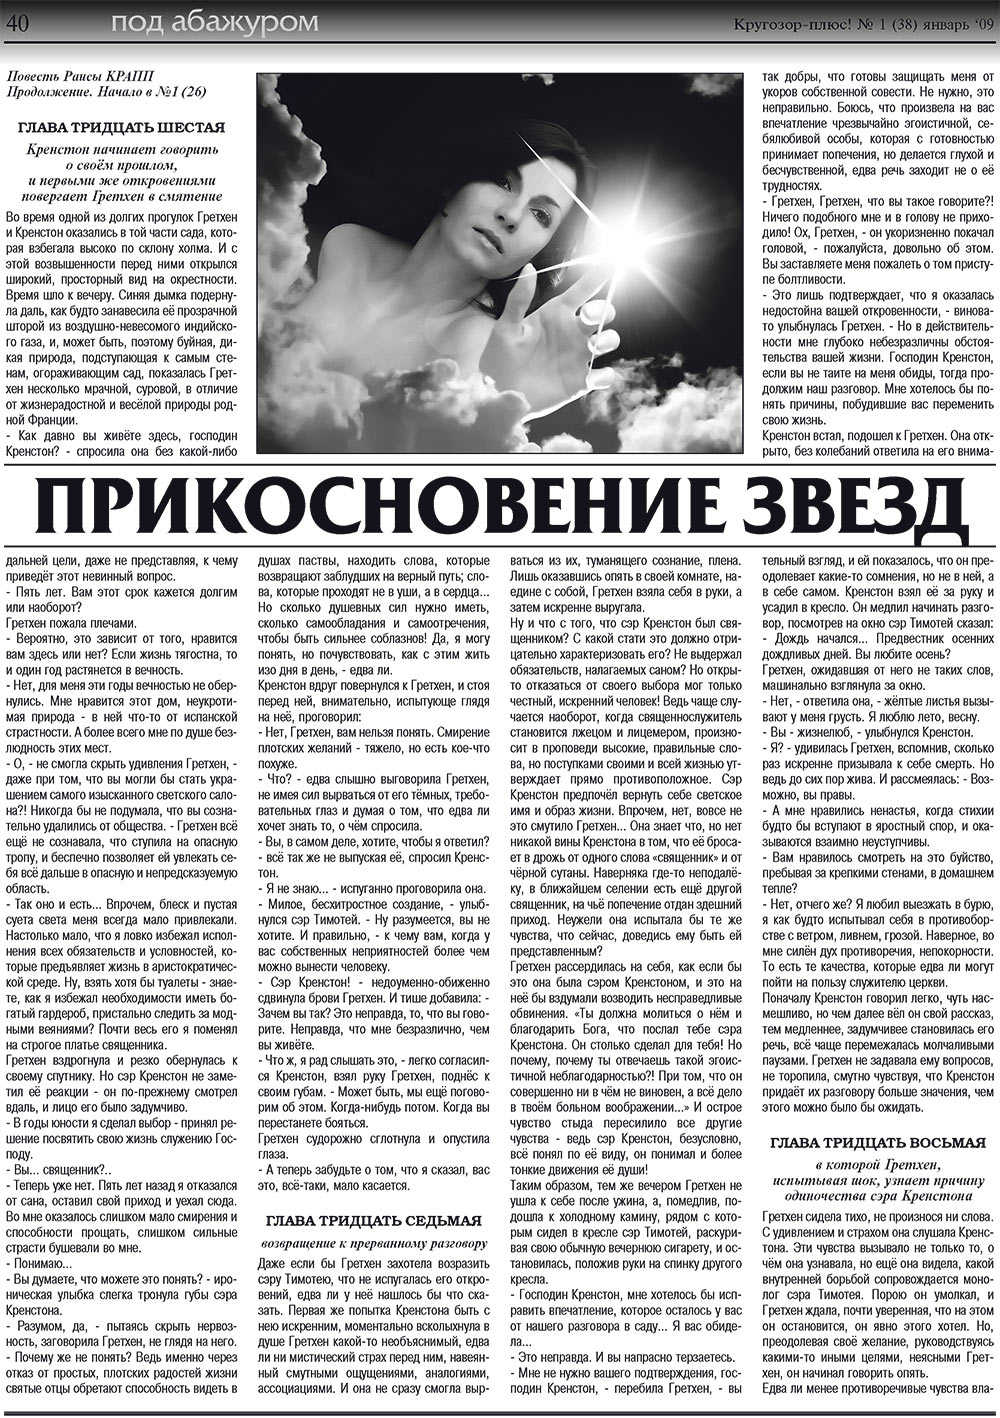 Кругозор плюс! (газета). 2009 год, номер 1, стр. 40